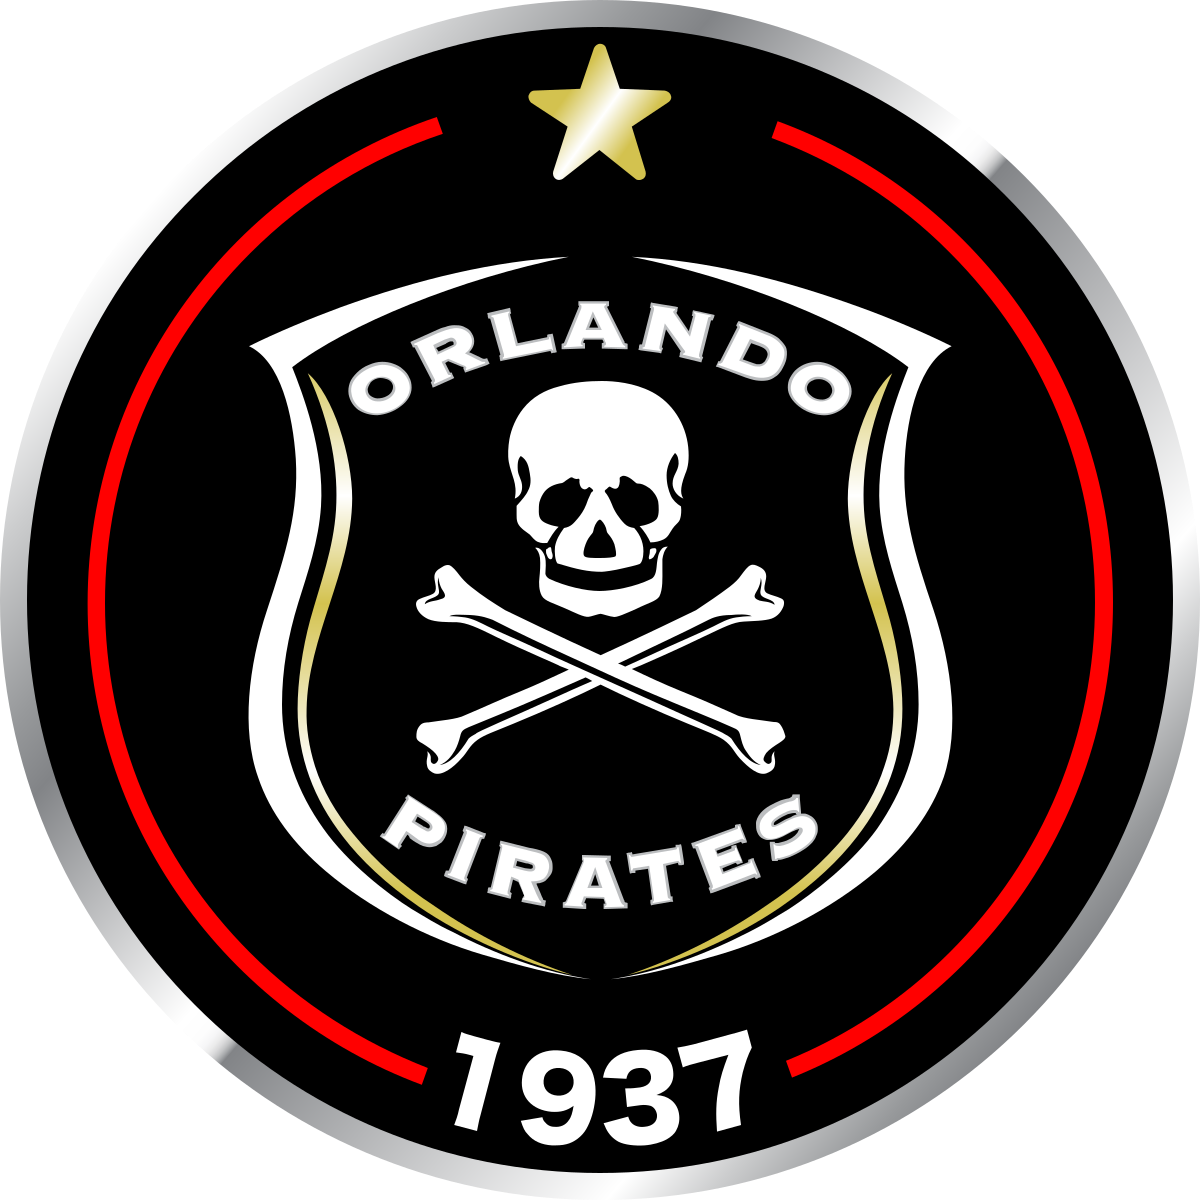 Orlando Pirates Football - Orlando Pirates Football Club